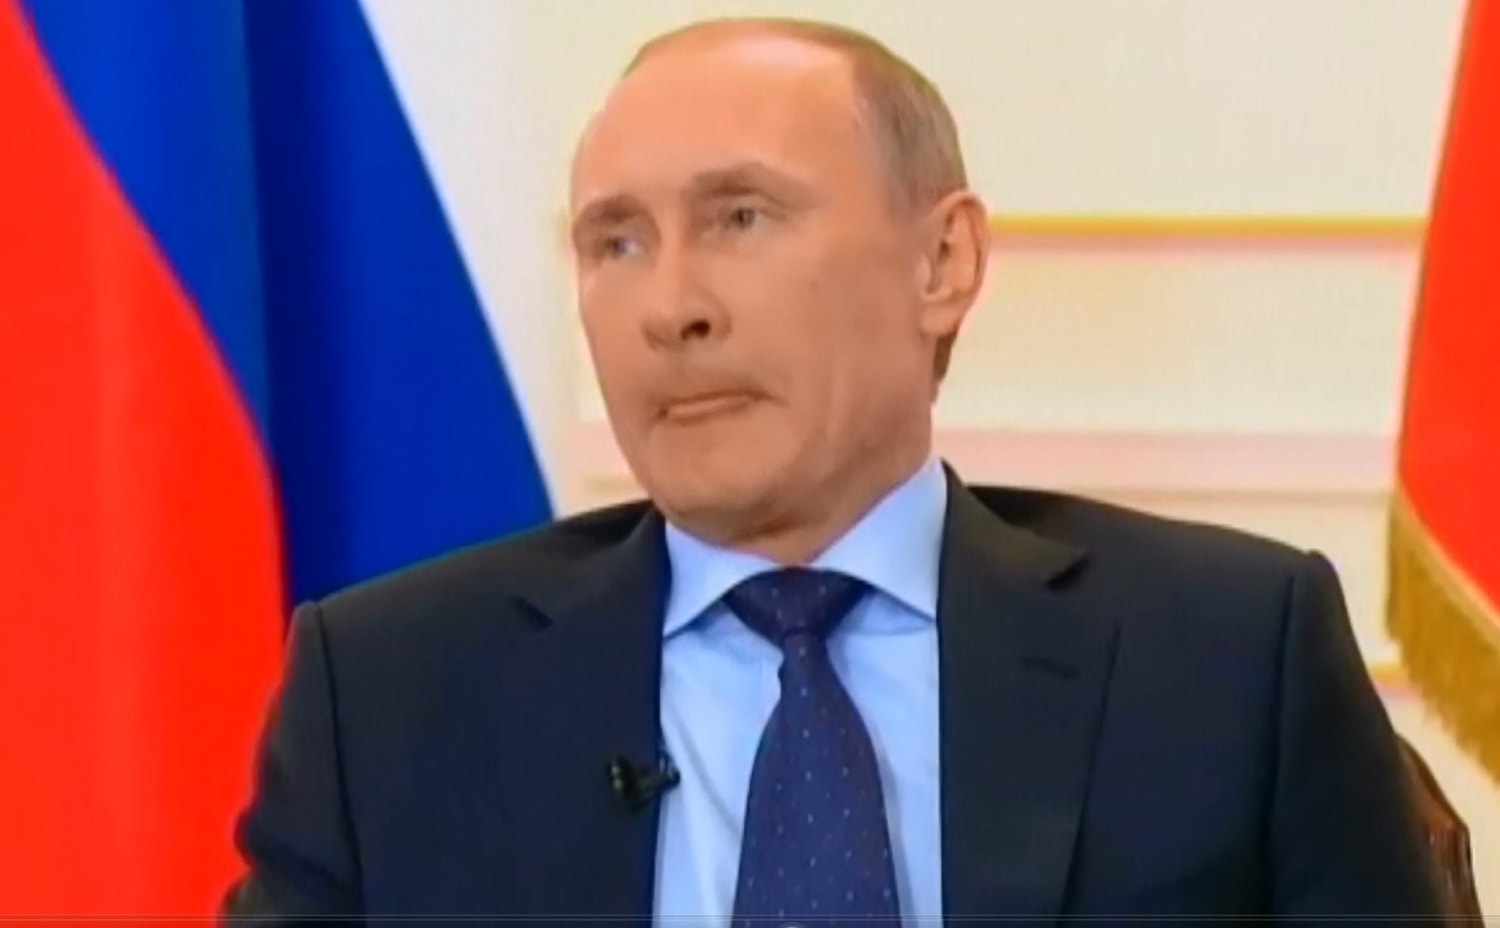 Putin's Body Language Betrayed Anxiety, Aggression - NBC News